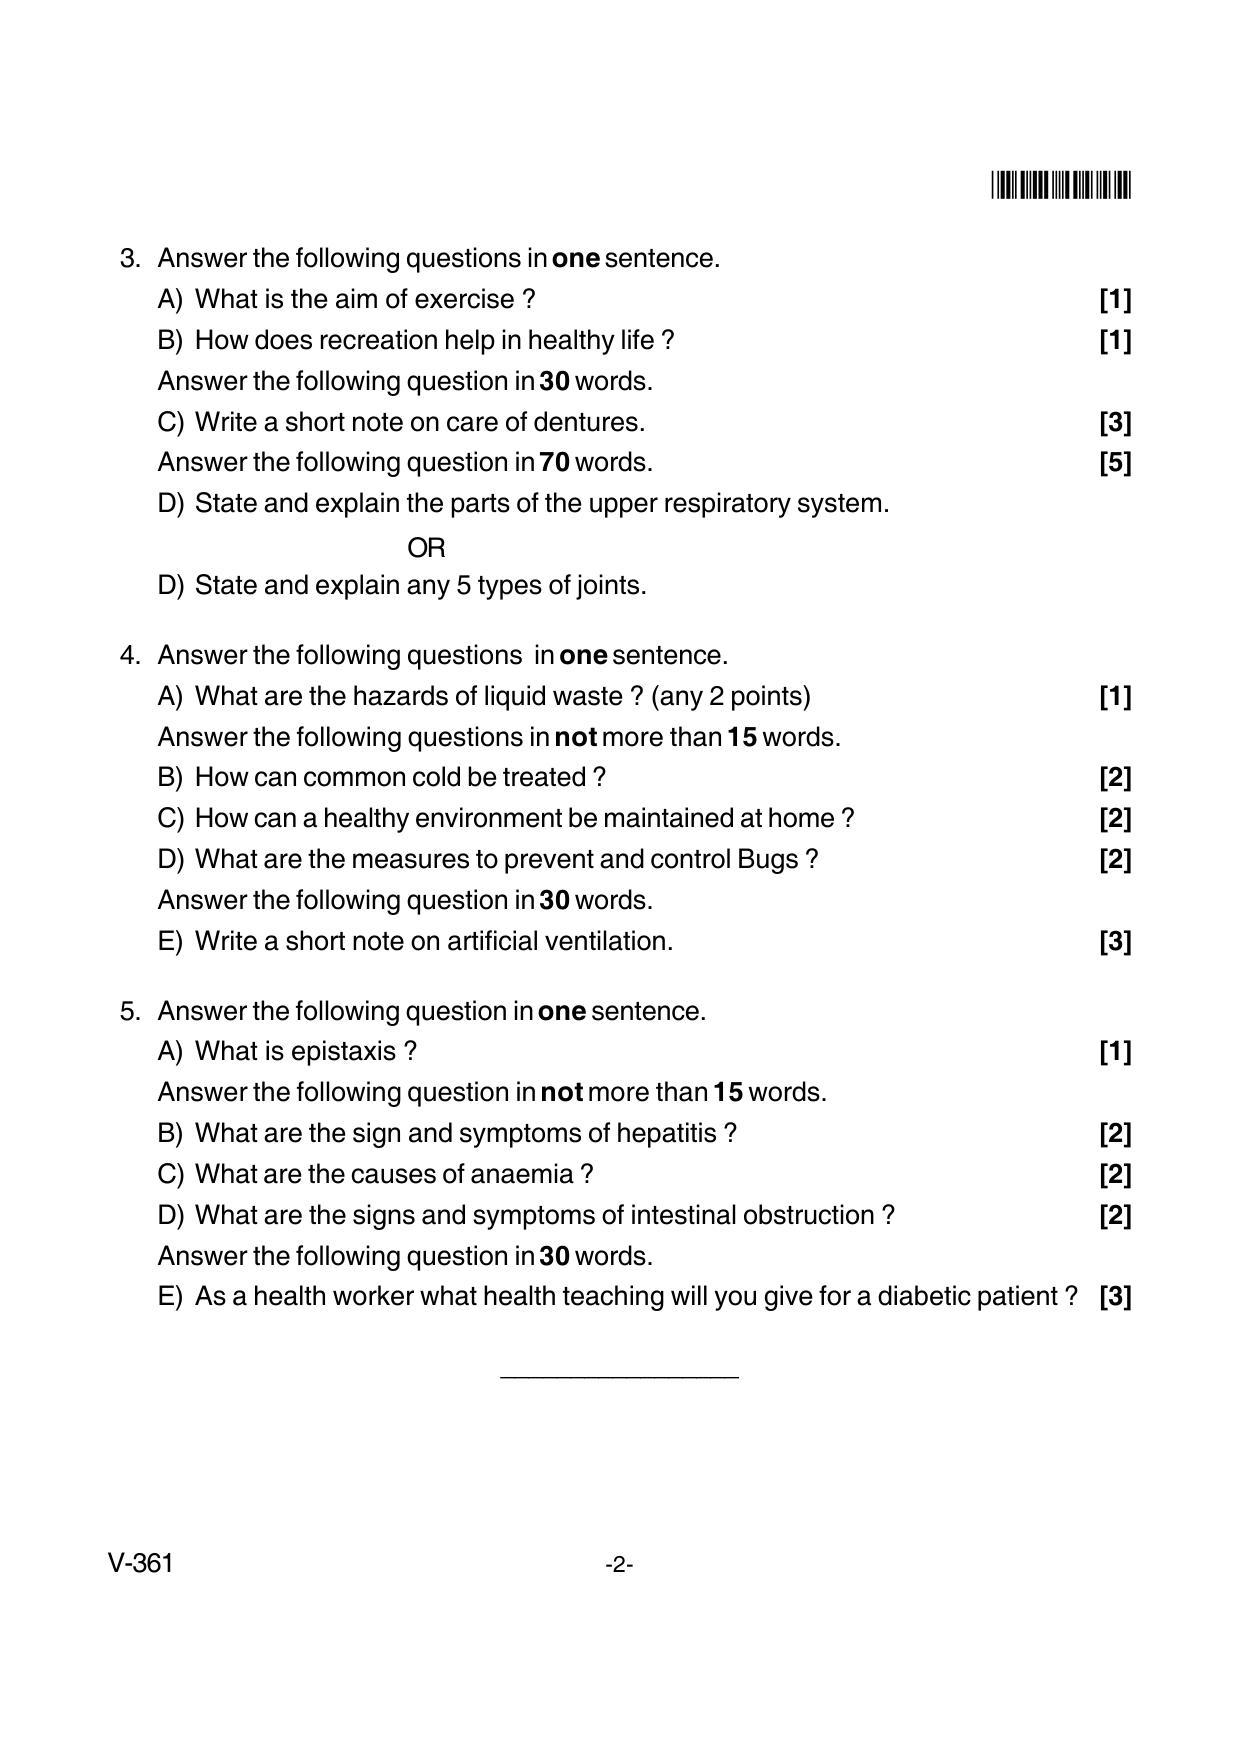 Goa Board Class 12 Fundamentals of Nursing - II  Voc 361 (June 2018) Question Paper - Page 2